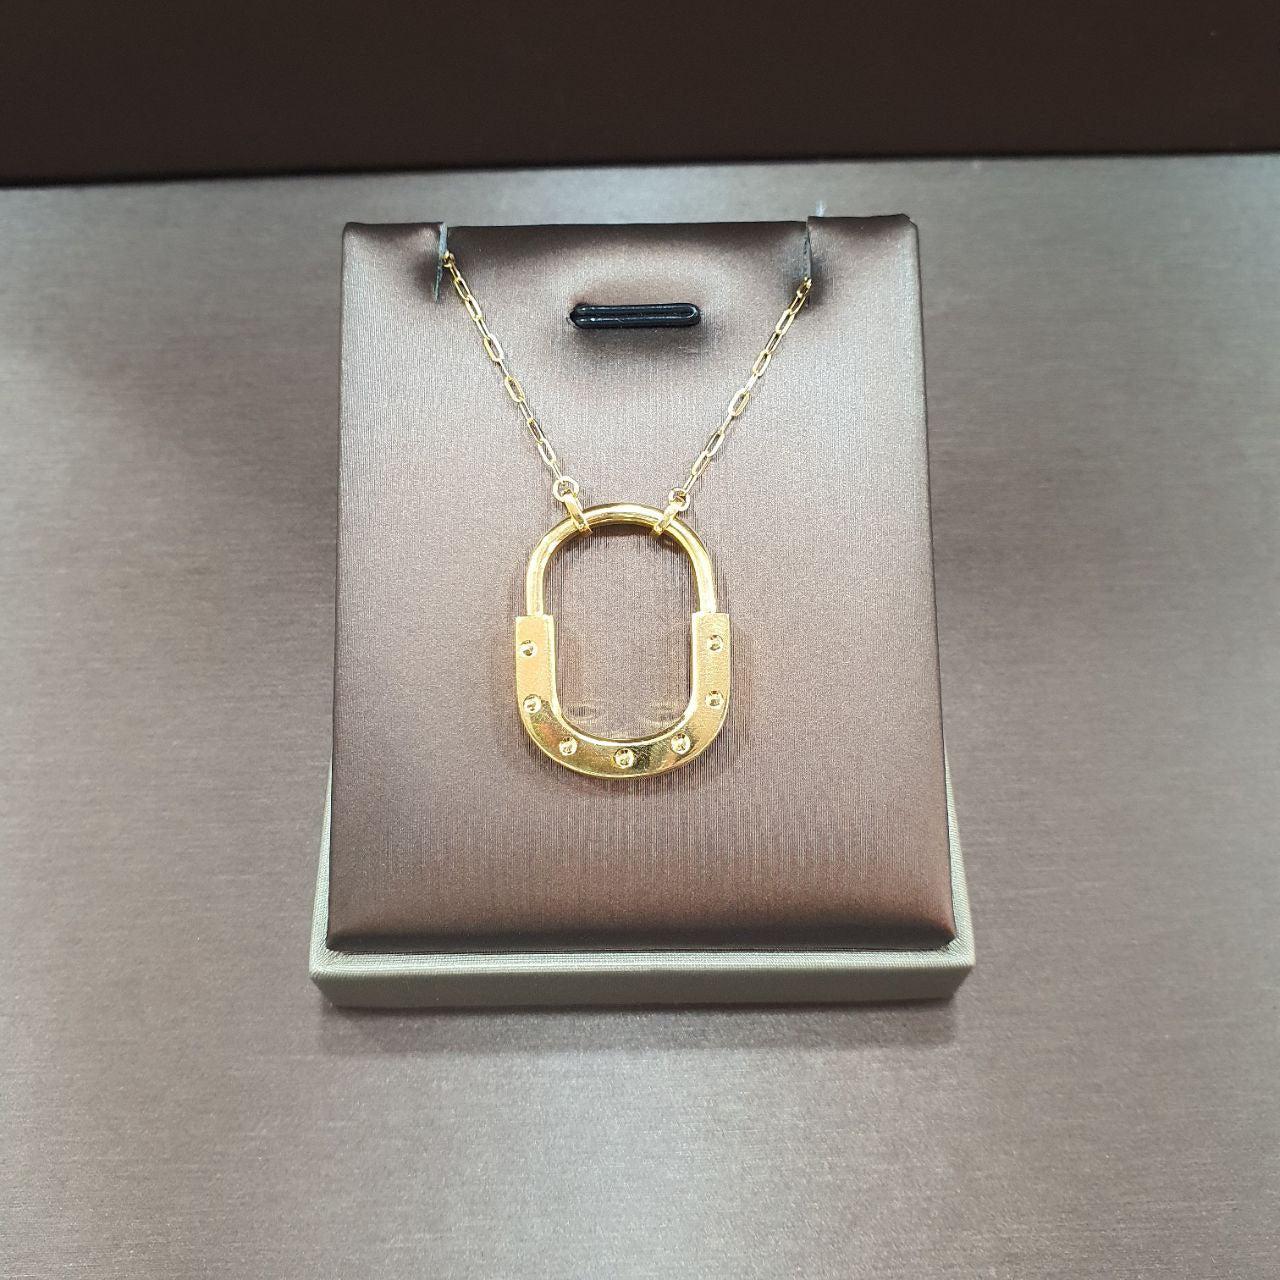 22k / 916 Gold T Design U Lock Necklace-Necklaces-Best Gold Shop